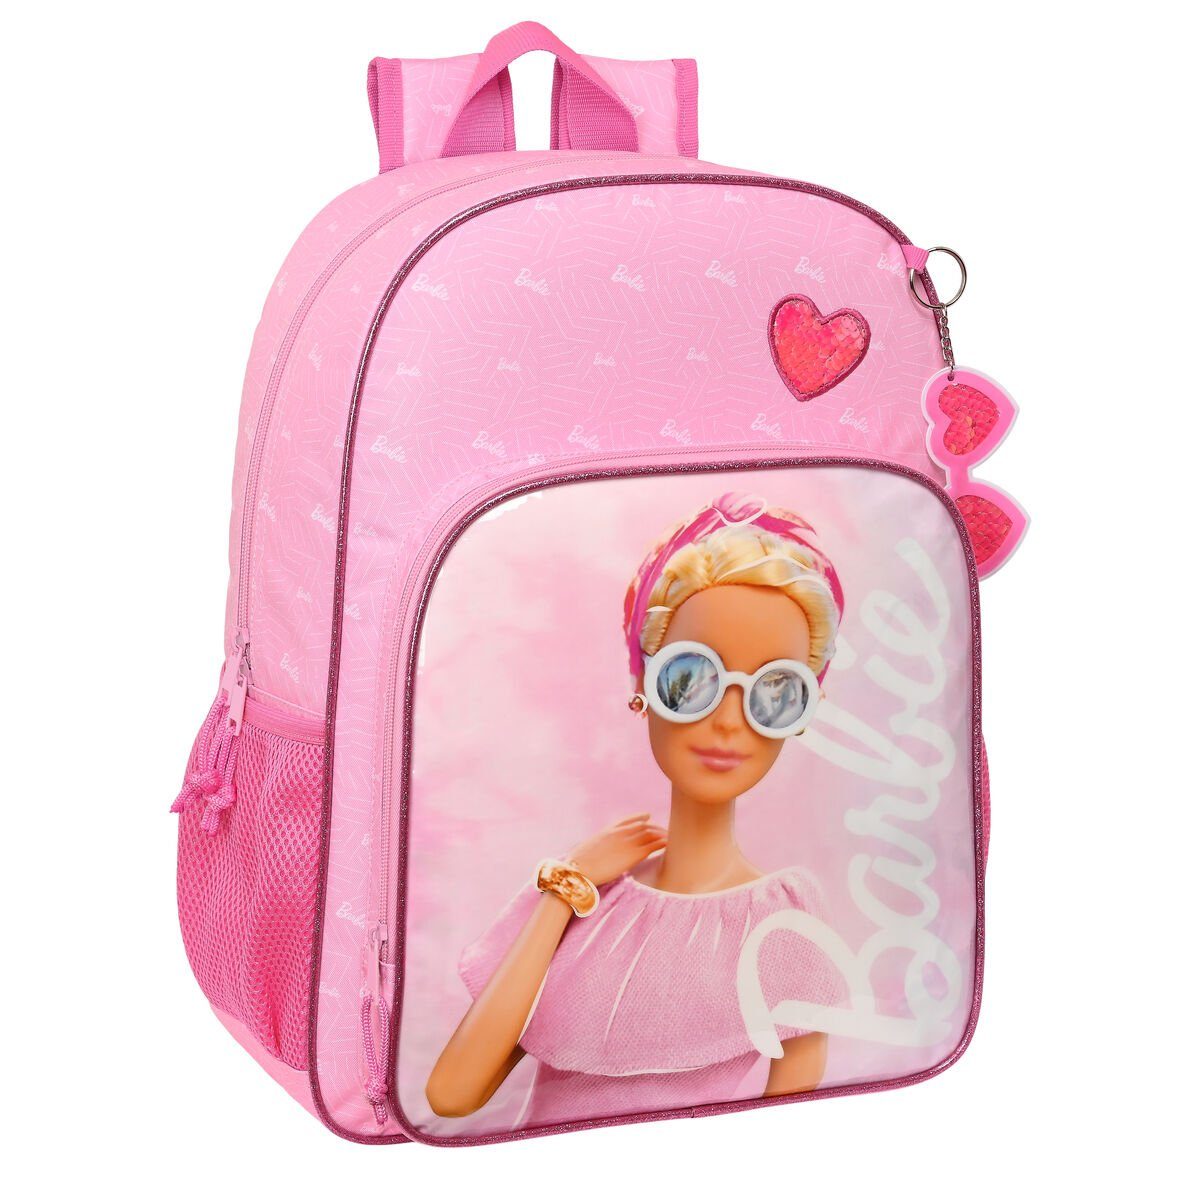 Barbie Rucksack Kinder-Rucksack Barbie 33 x x Girl Rosa cm 42 14